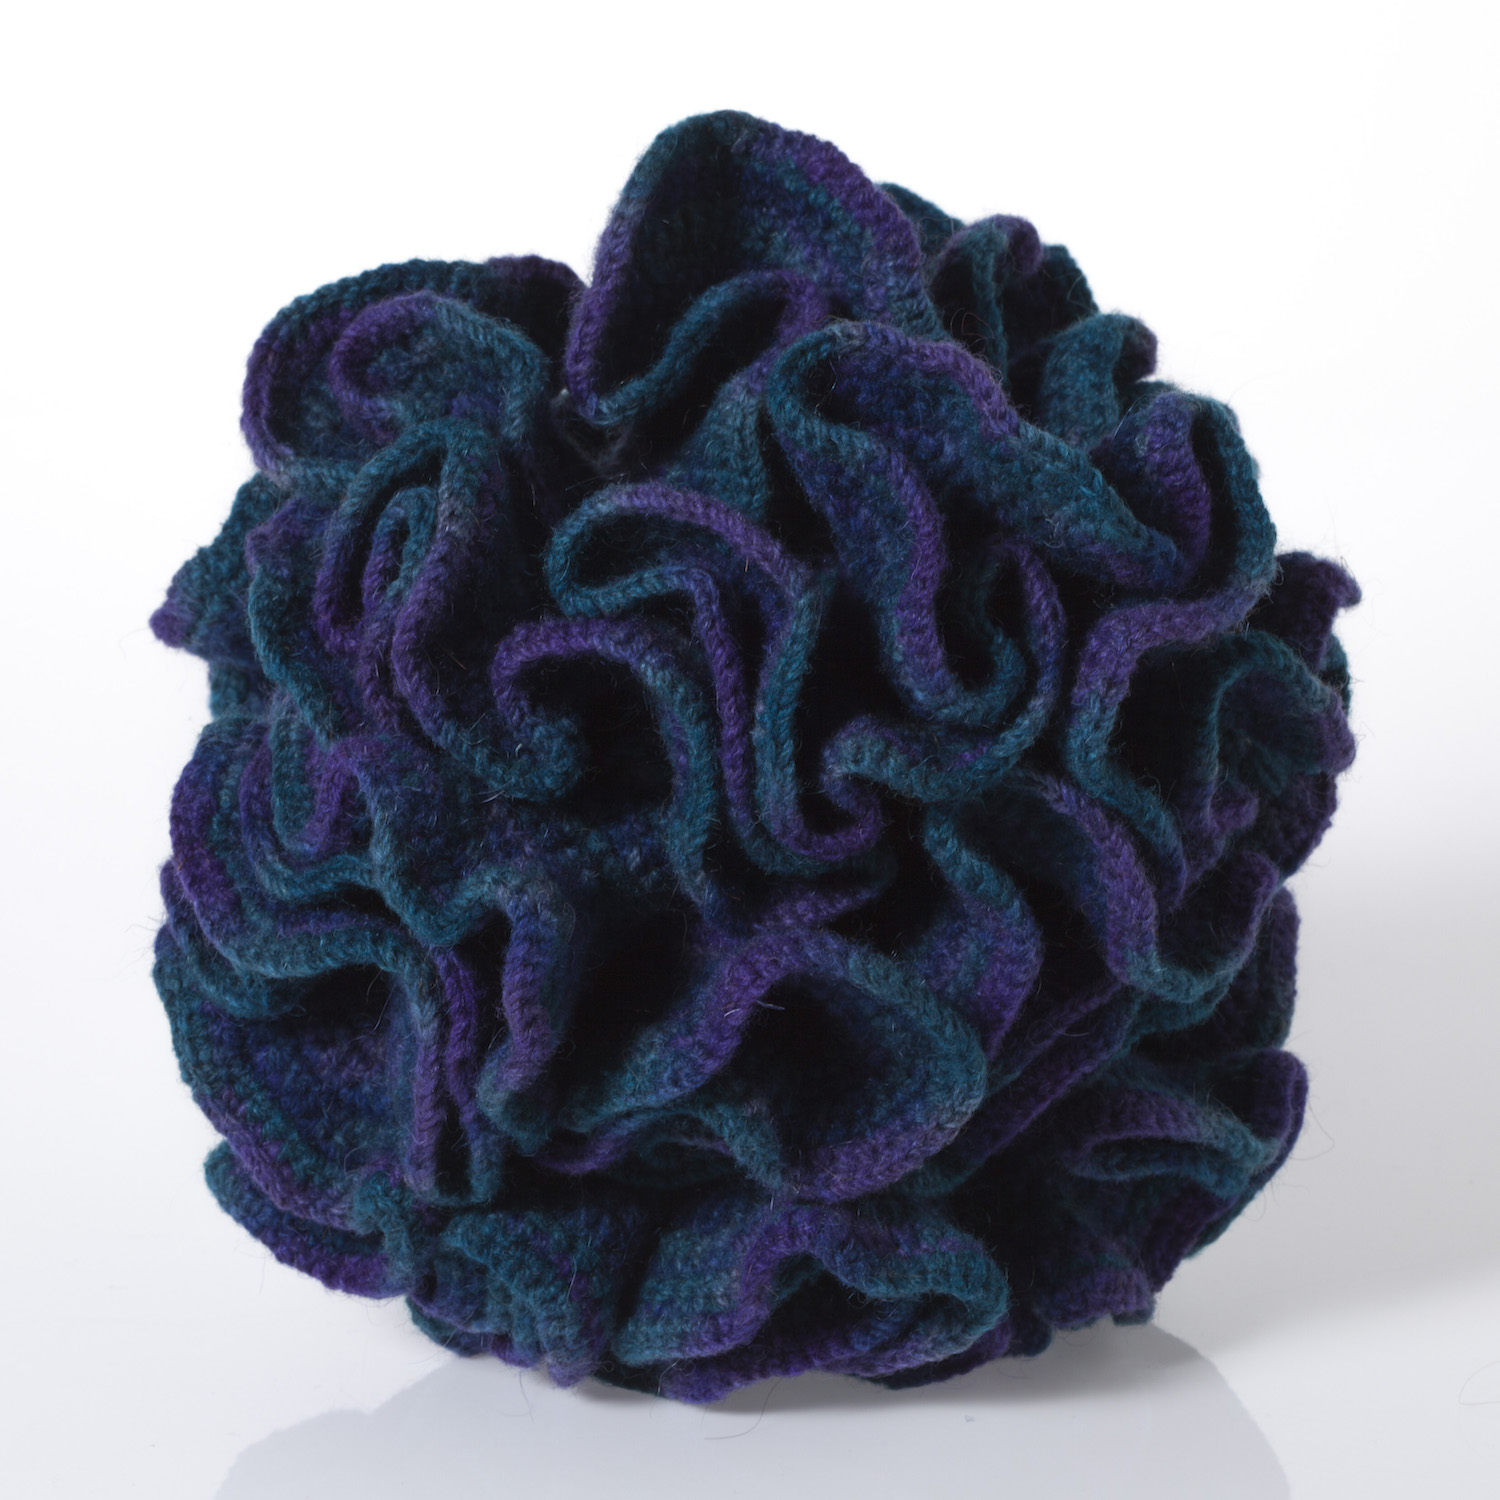 Crochet hyperbolic plane